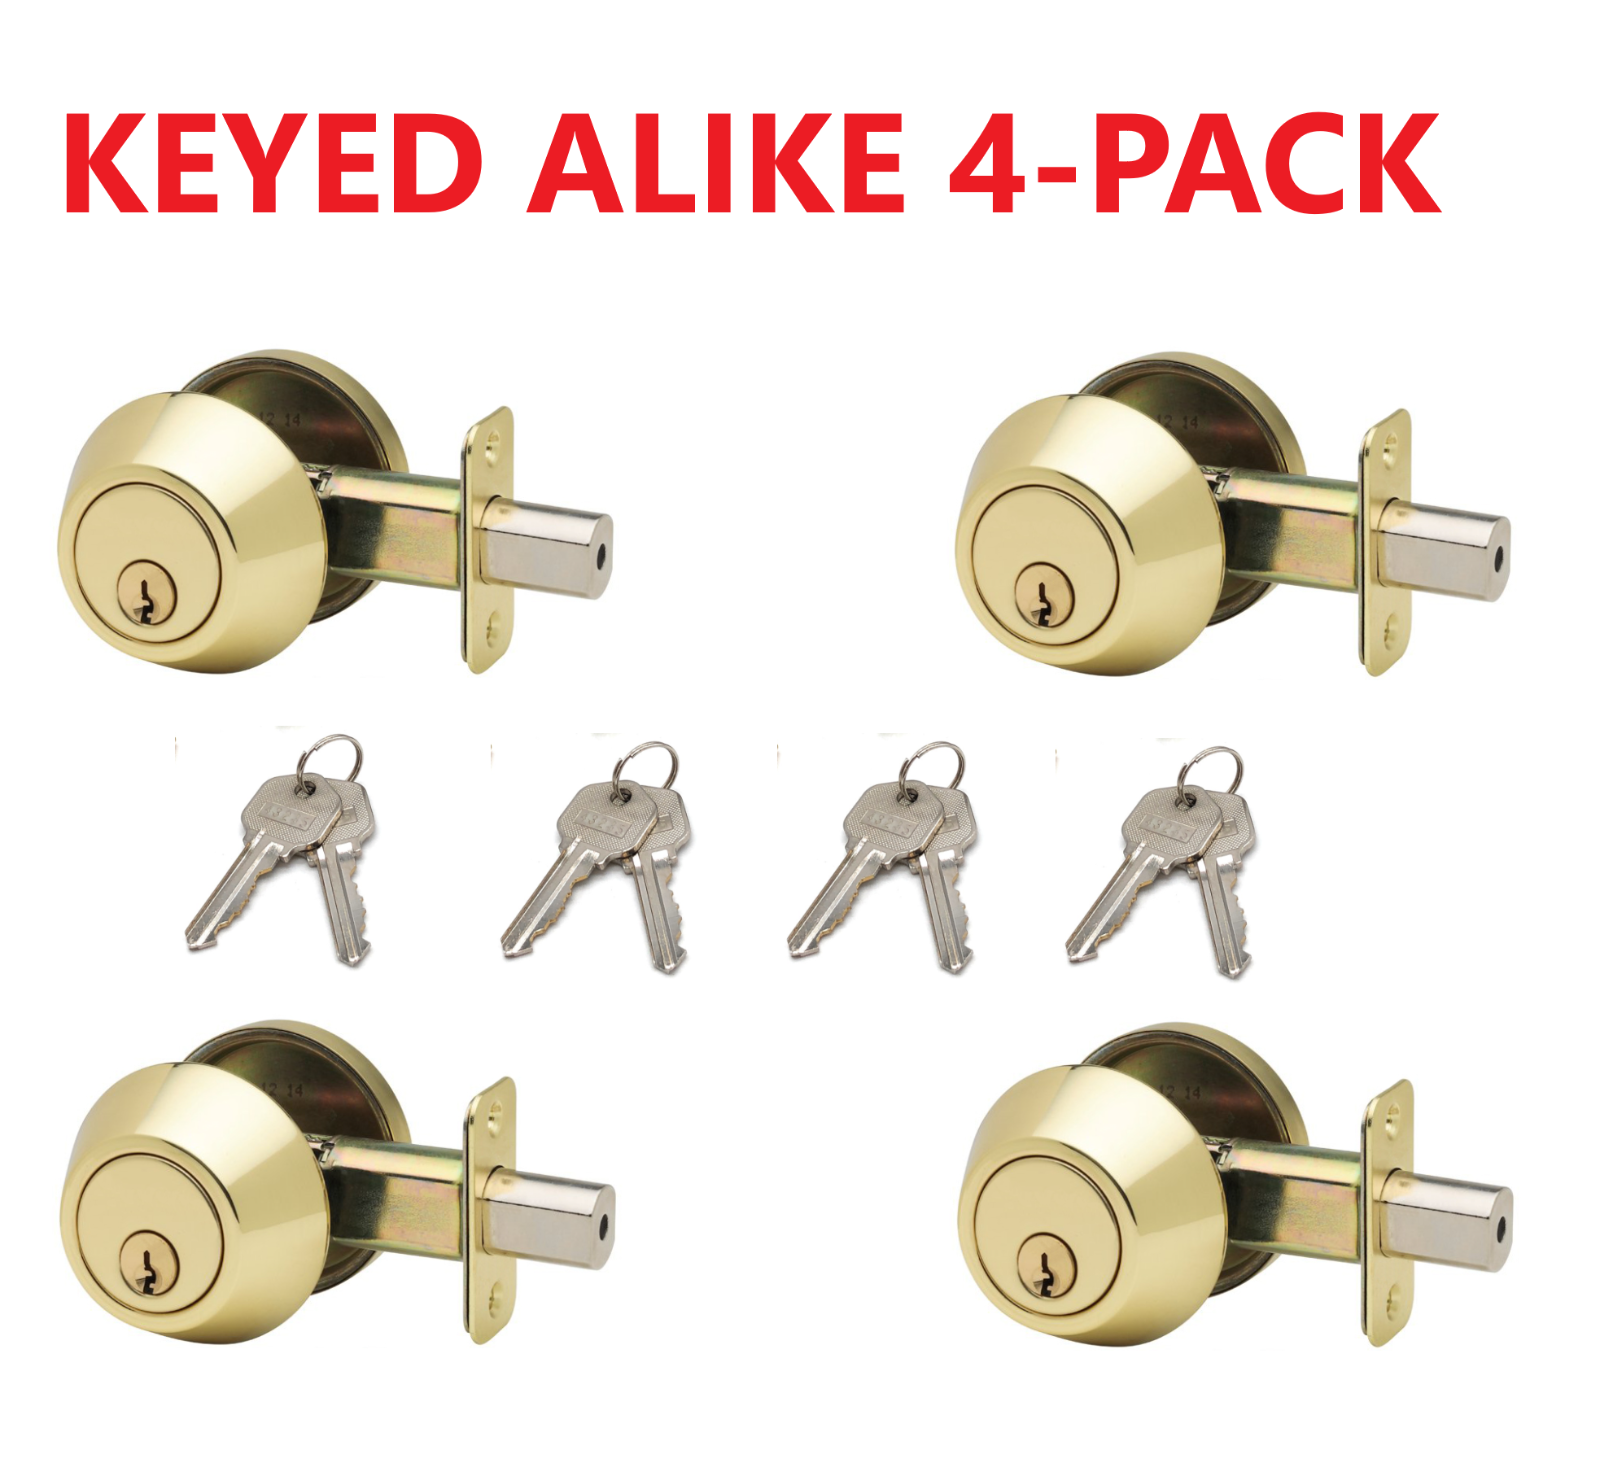 [4 Pack] Keyed Alike Deadbolts Adjustable 2-3/8" or 2-3/4",Polished Brass Finish Vault Locks 14-1426